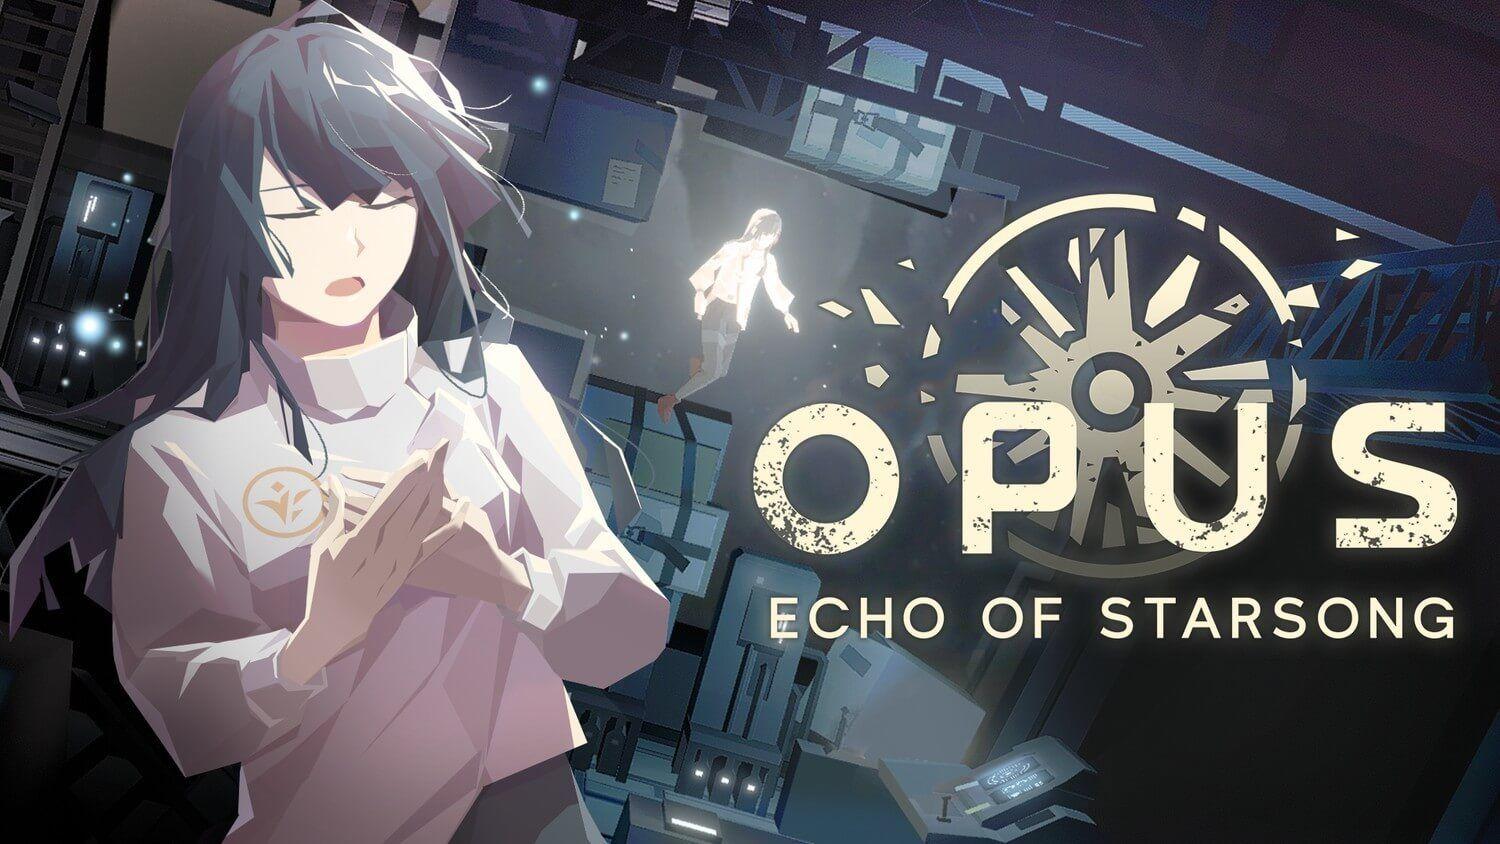 Opus: Echo of Starsong